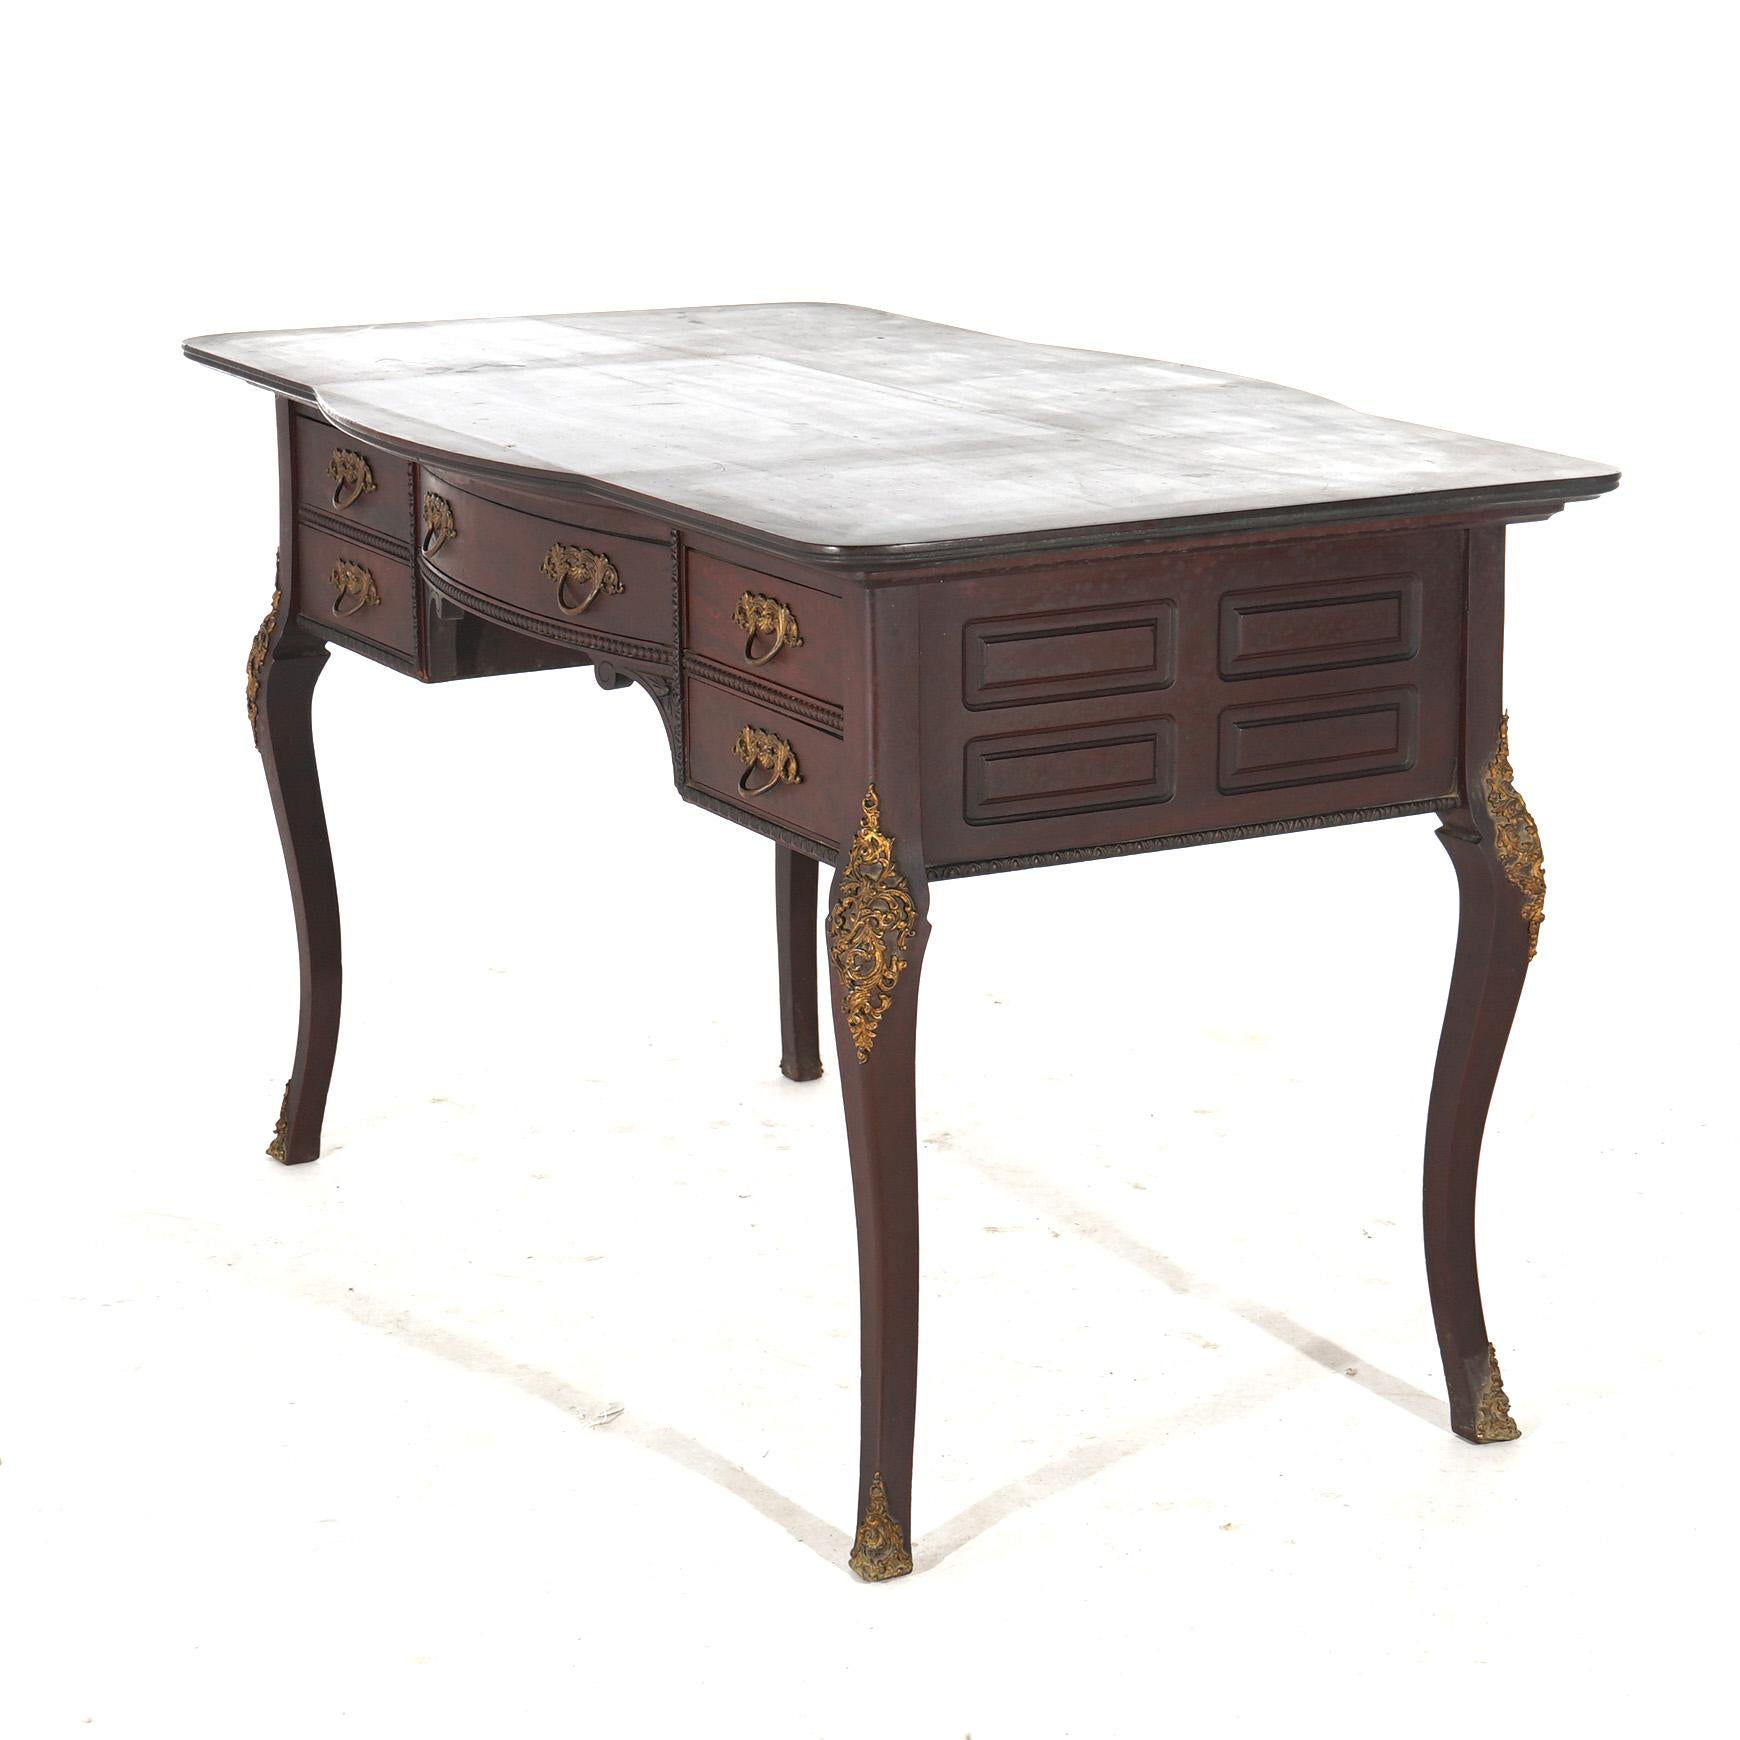 20th Century Antique French Mahogany & Ormolu Bureau Plat Writing Desk C1910 For Sale